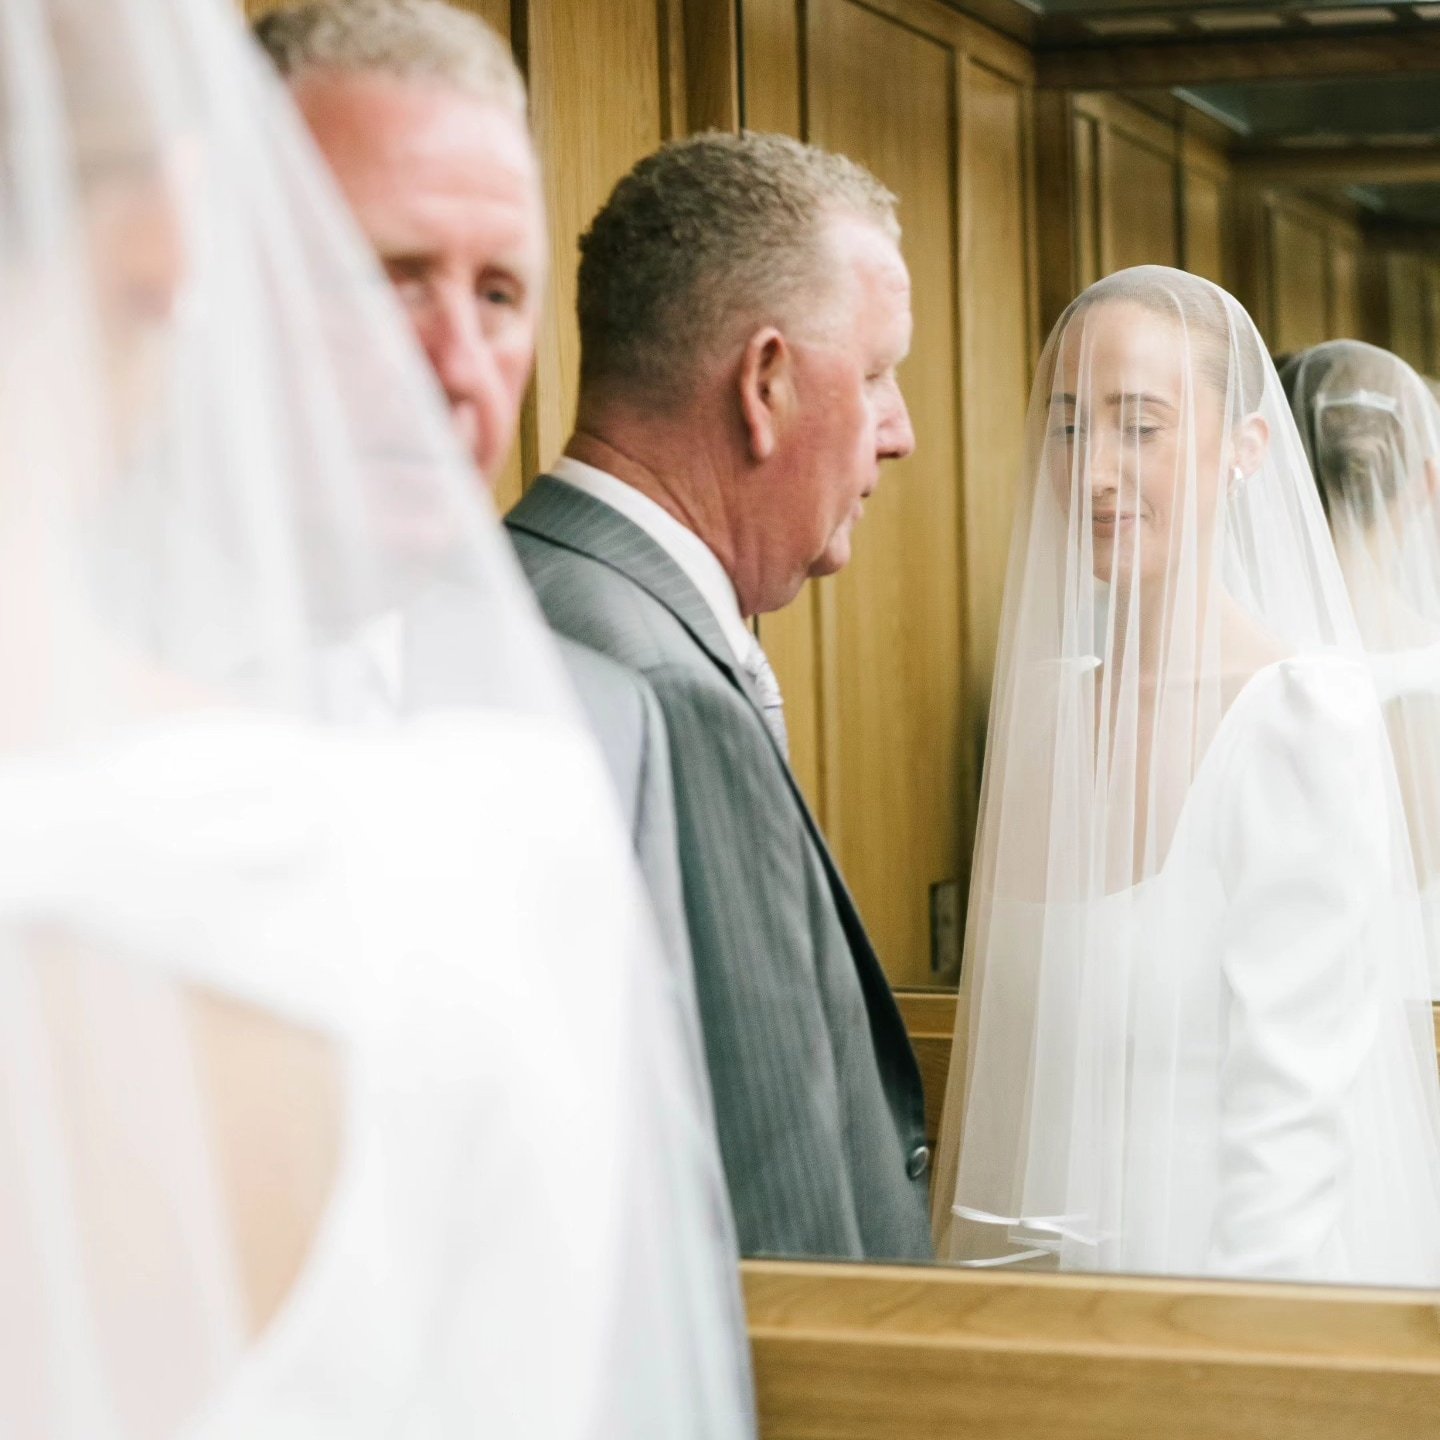 Beautiful bride Elizabeth wore the Foxglove wedding dress by Halfpenny London